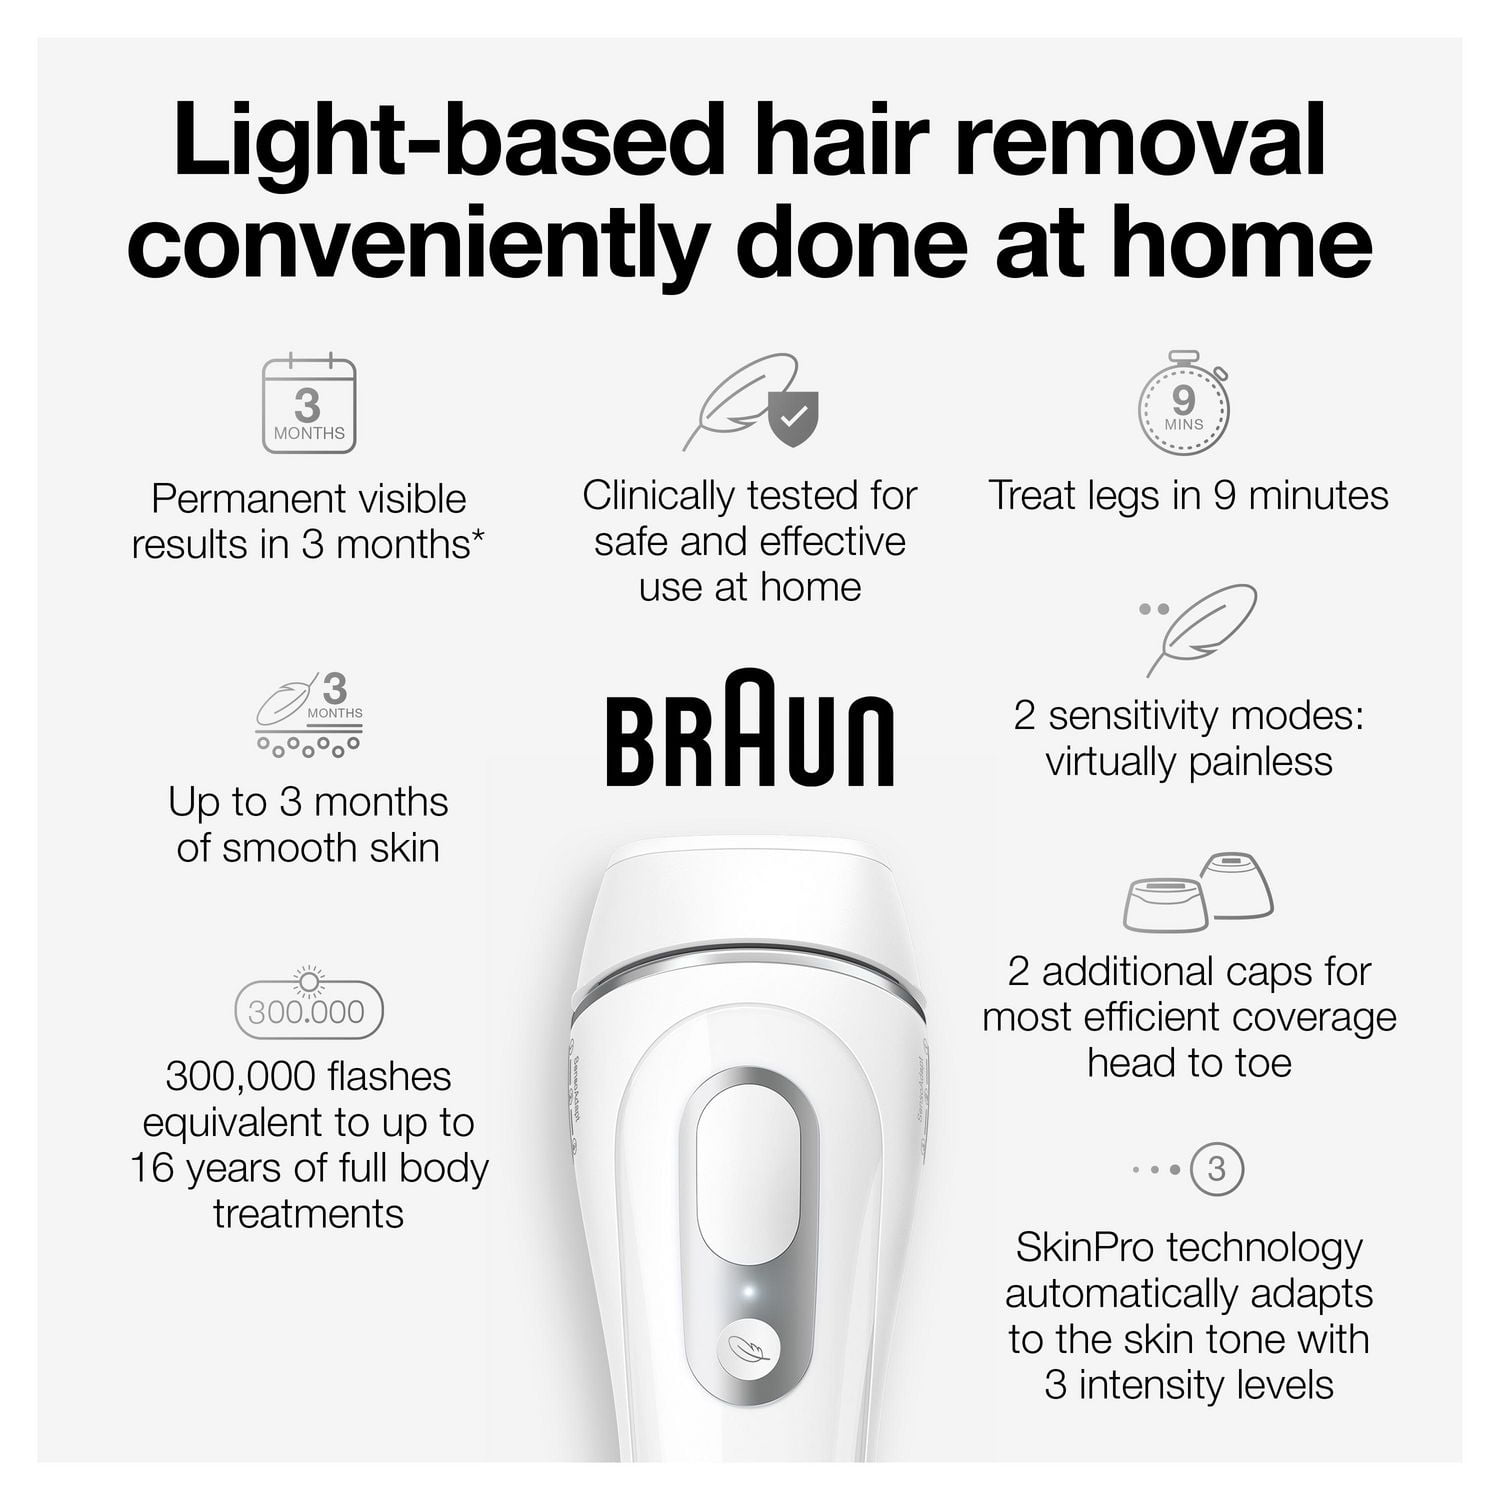 Braun IPL Silk Expert Pro 3, Visible Hair Removal, Venus Razor And